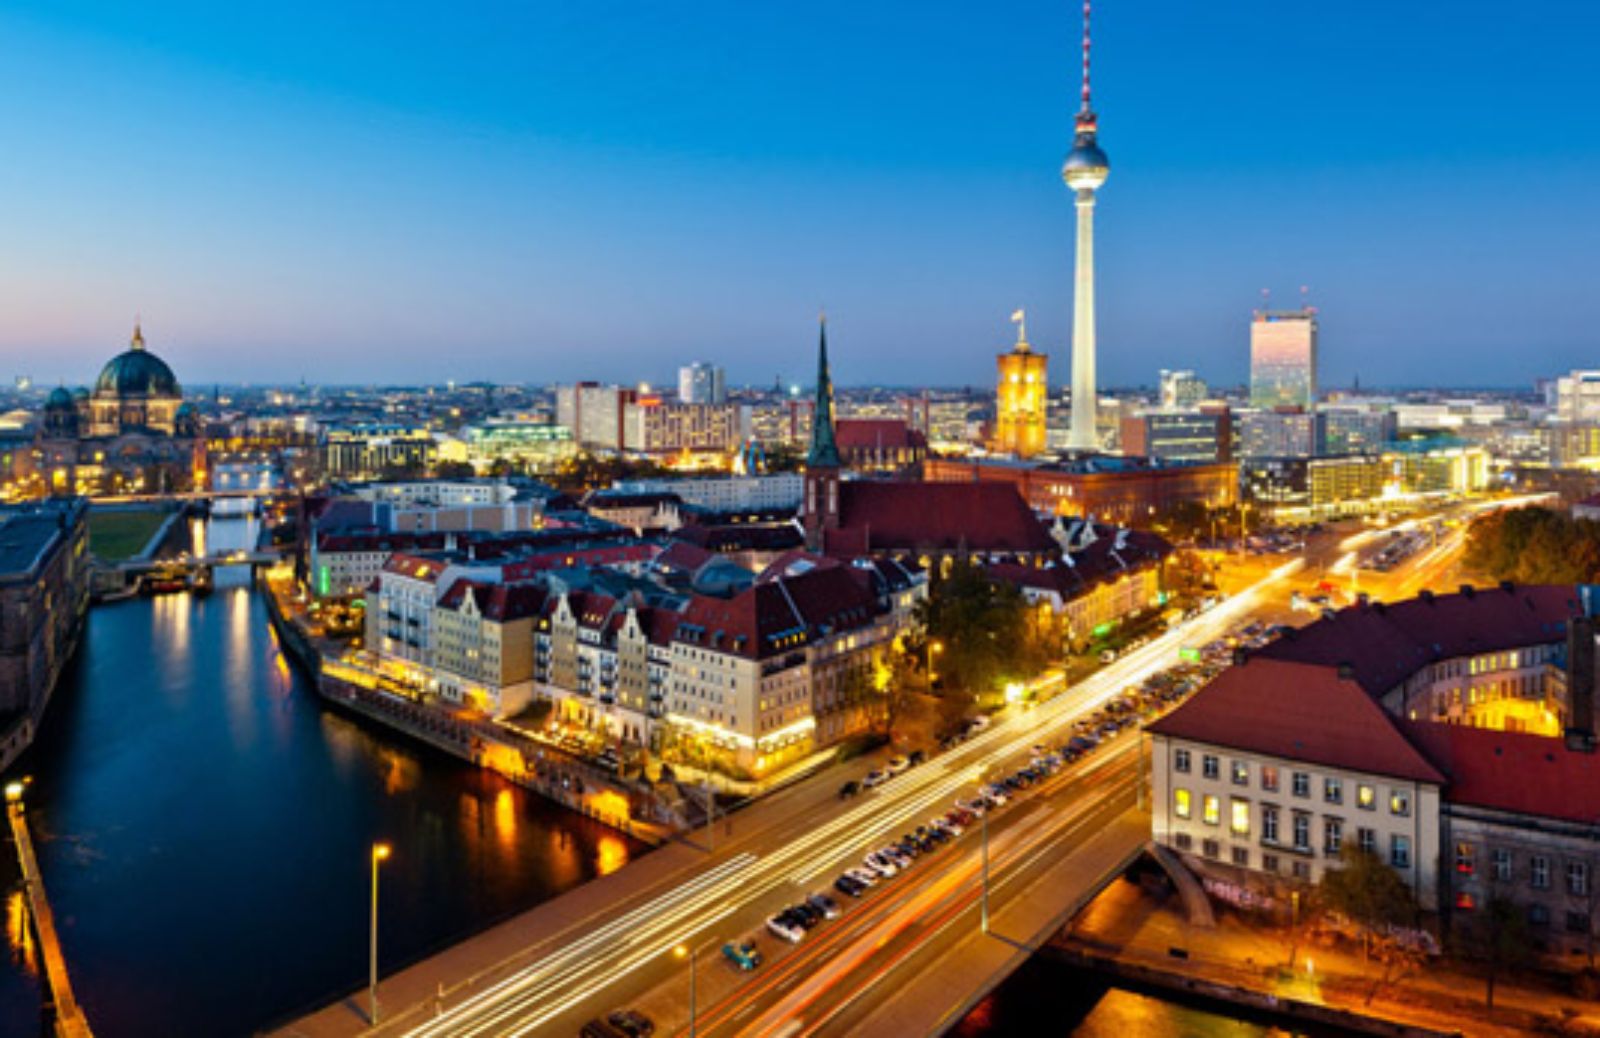 Le 5 cose da vedere assolutamente a Berlino